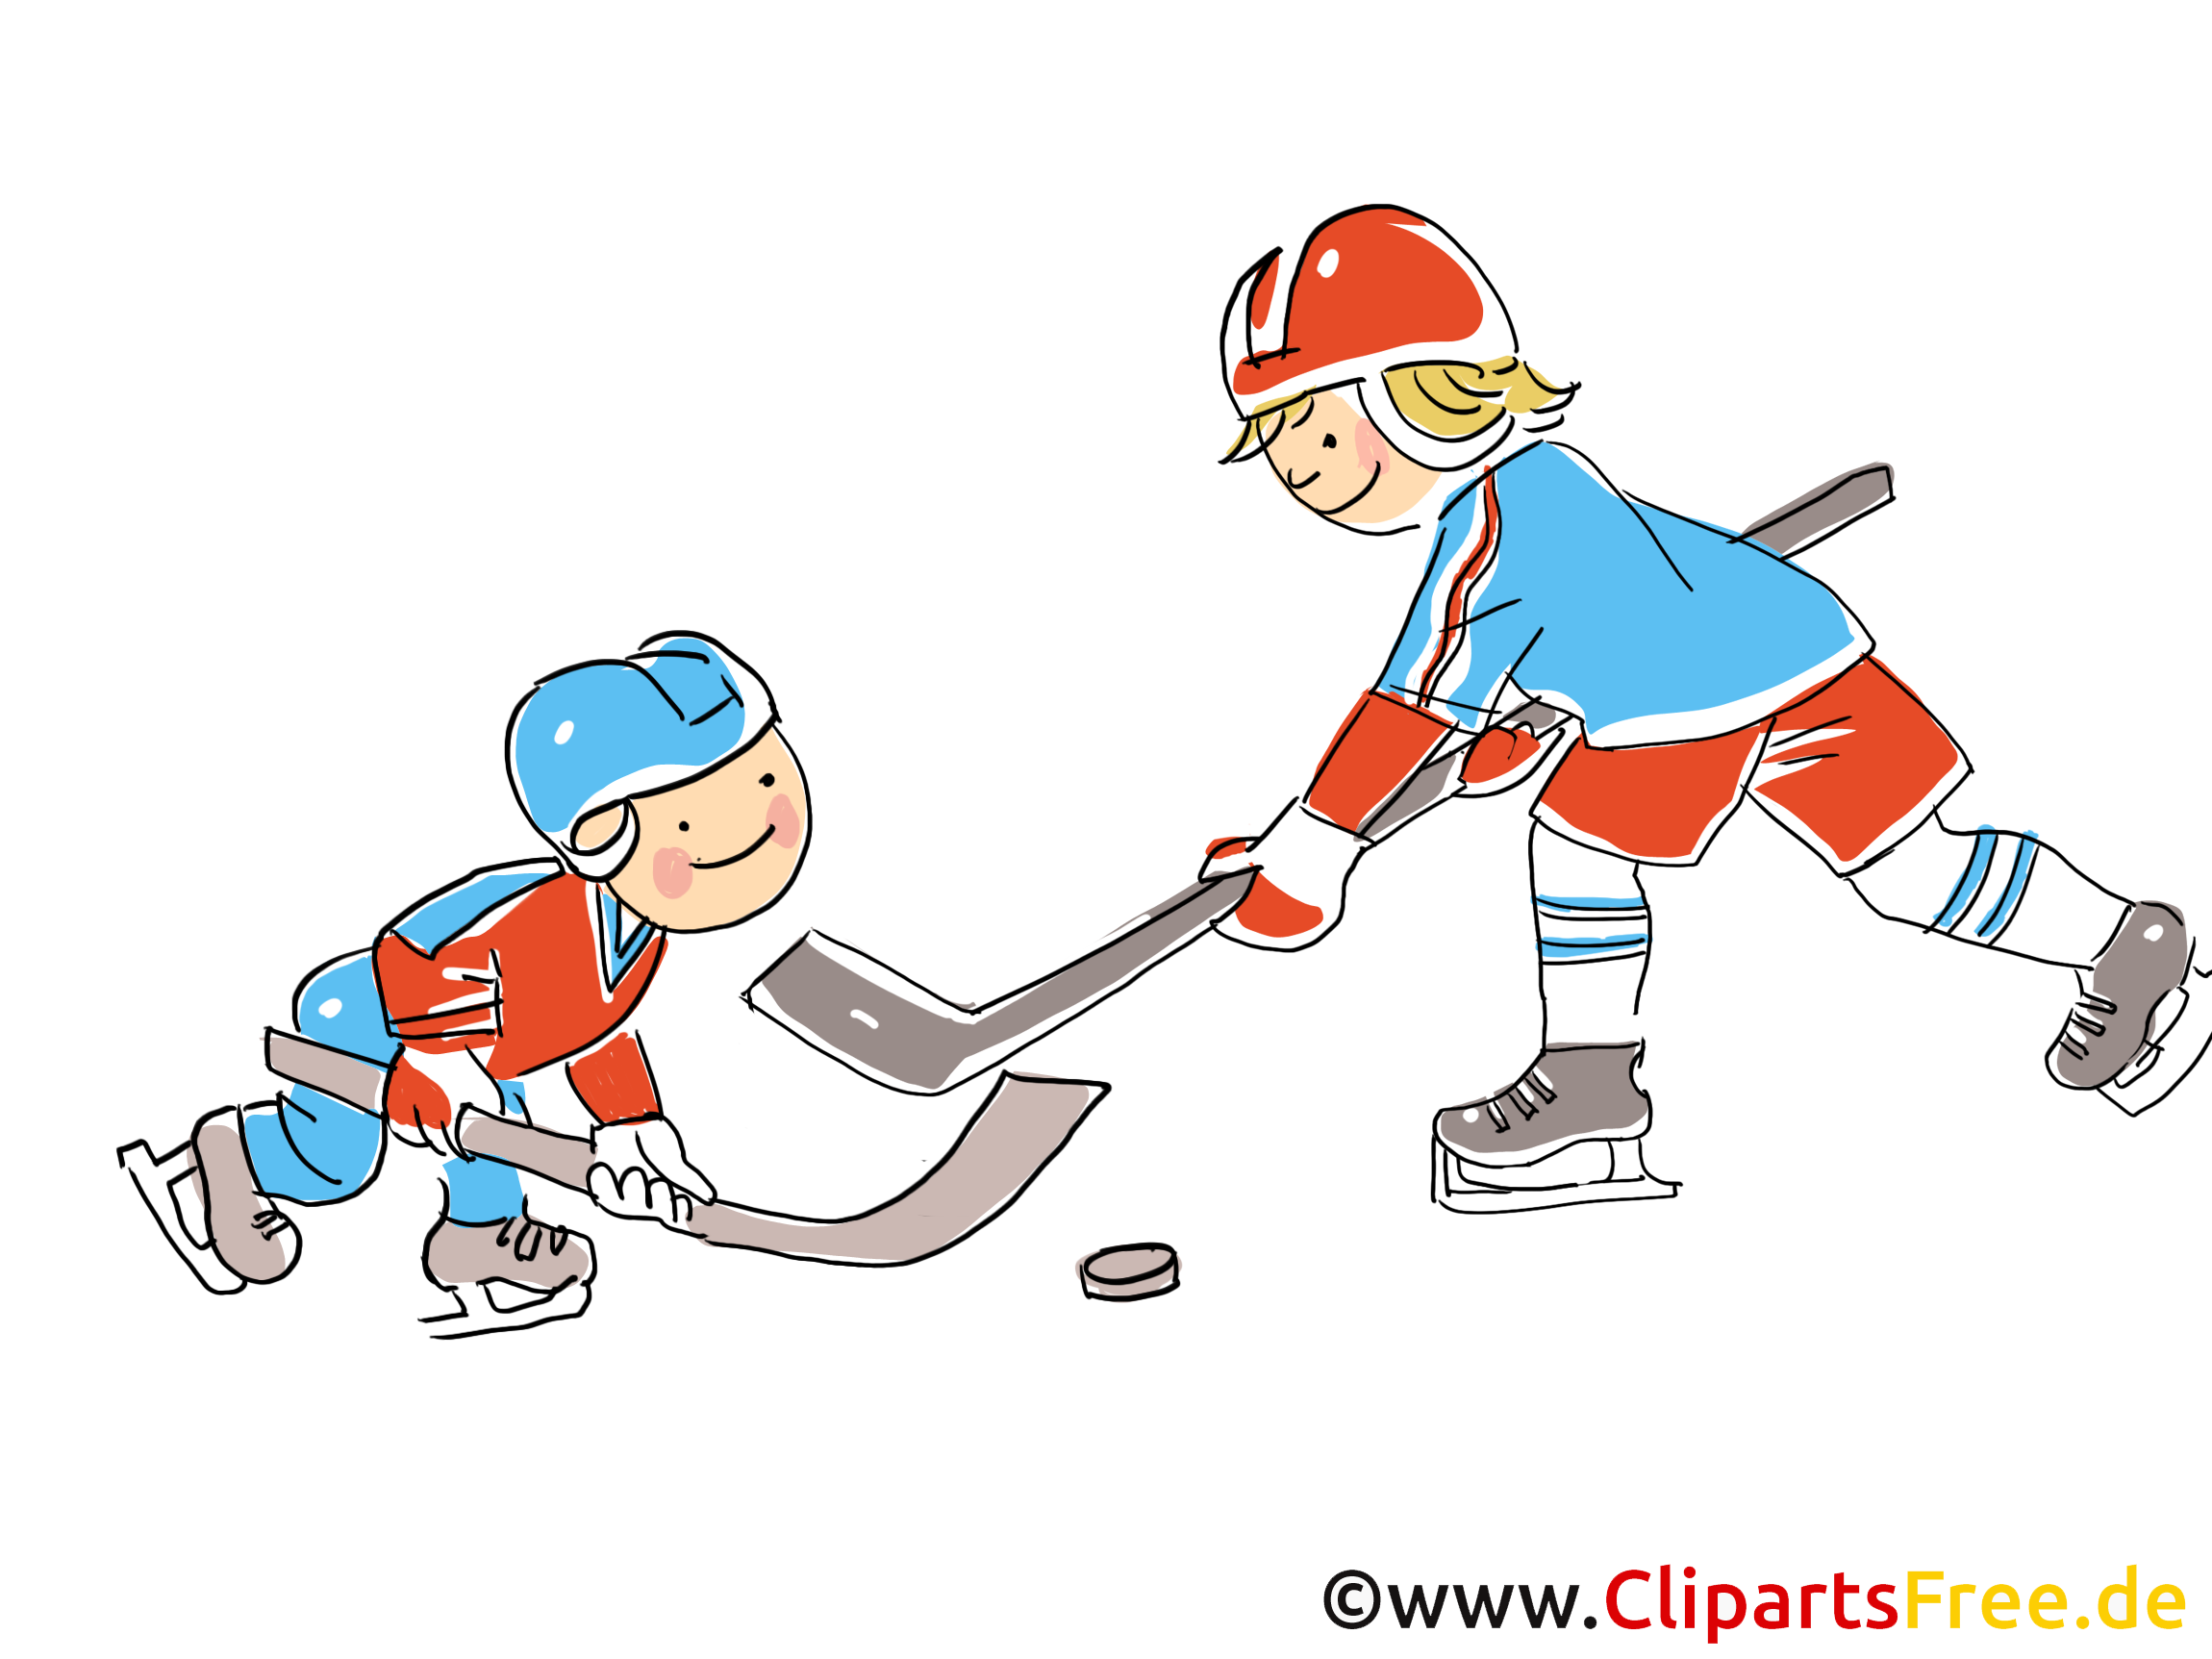 Hockeyeurs cliparts gratuis - Hockey images